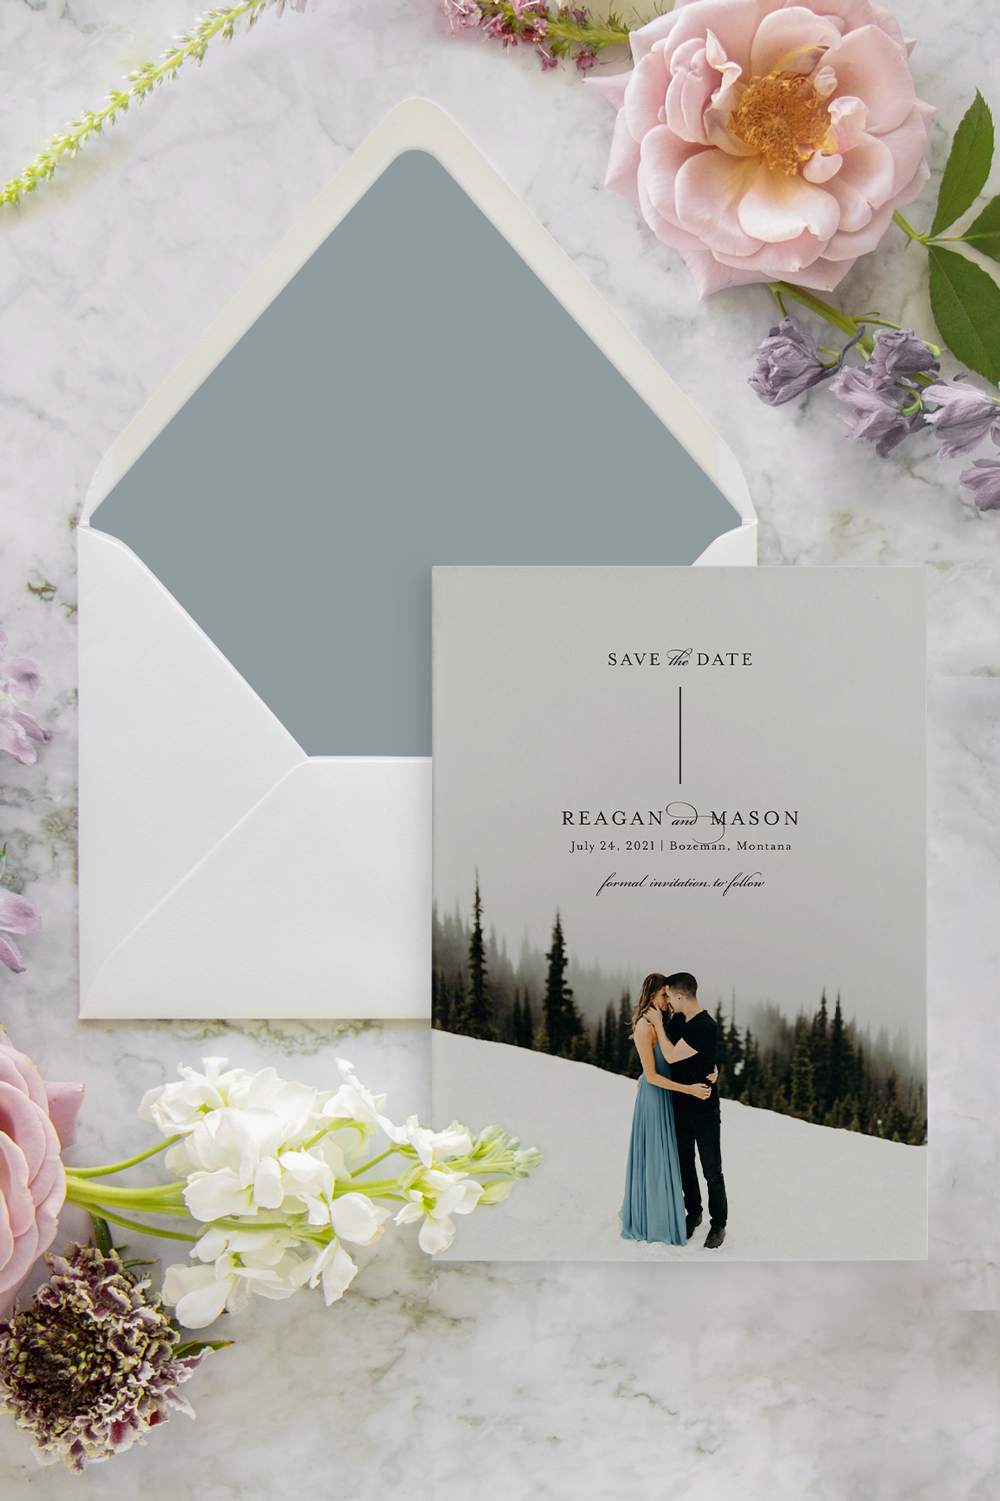 elegant-photo-wedding-save-the-date-cards-seventhandanderson